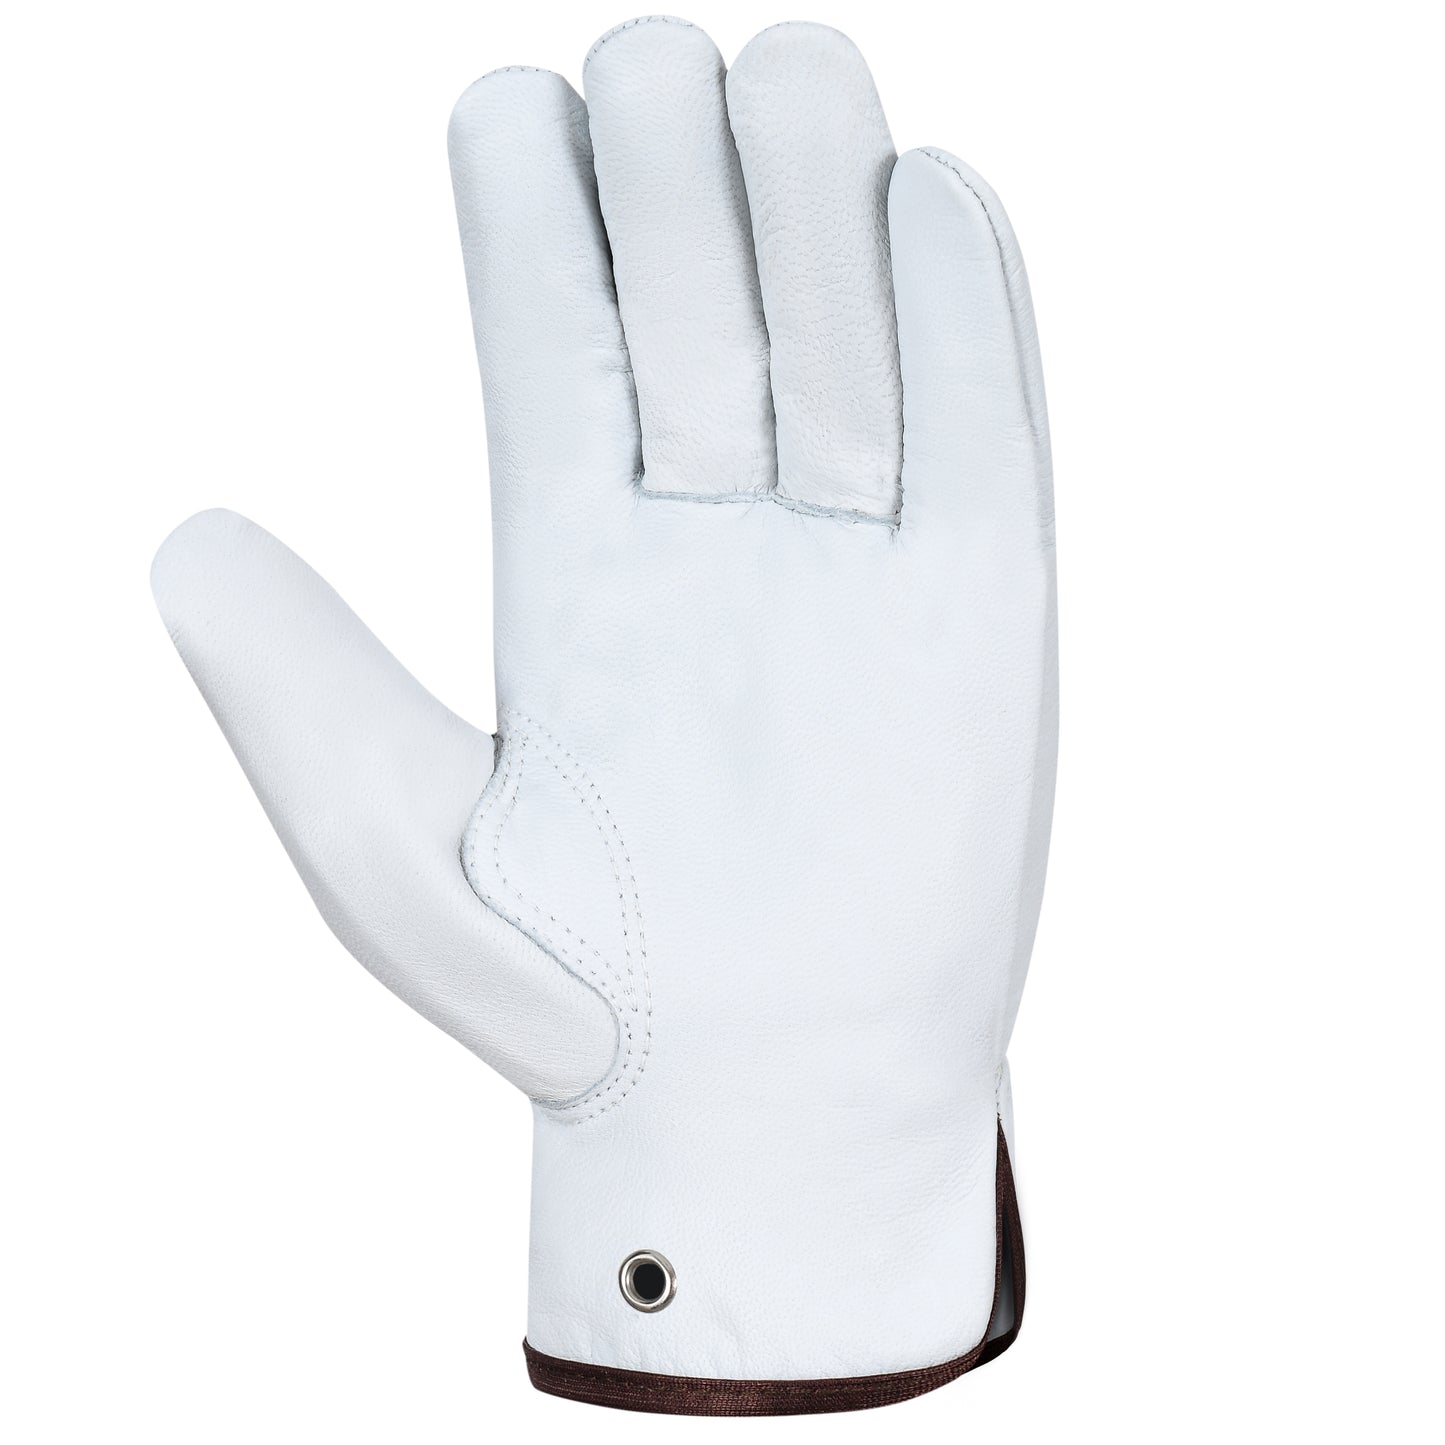 SIXPO Leather Work Gloves Pack of 12 Pairs Warehouse Gardening Construction Gloves for Men Women Goat Skin Working Gloves